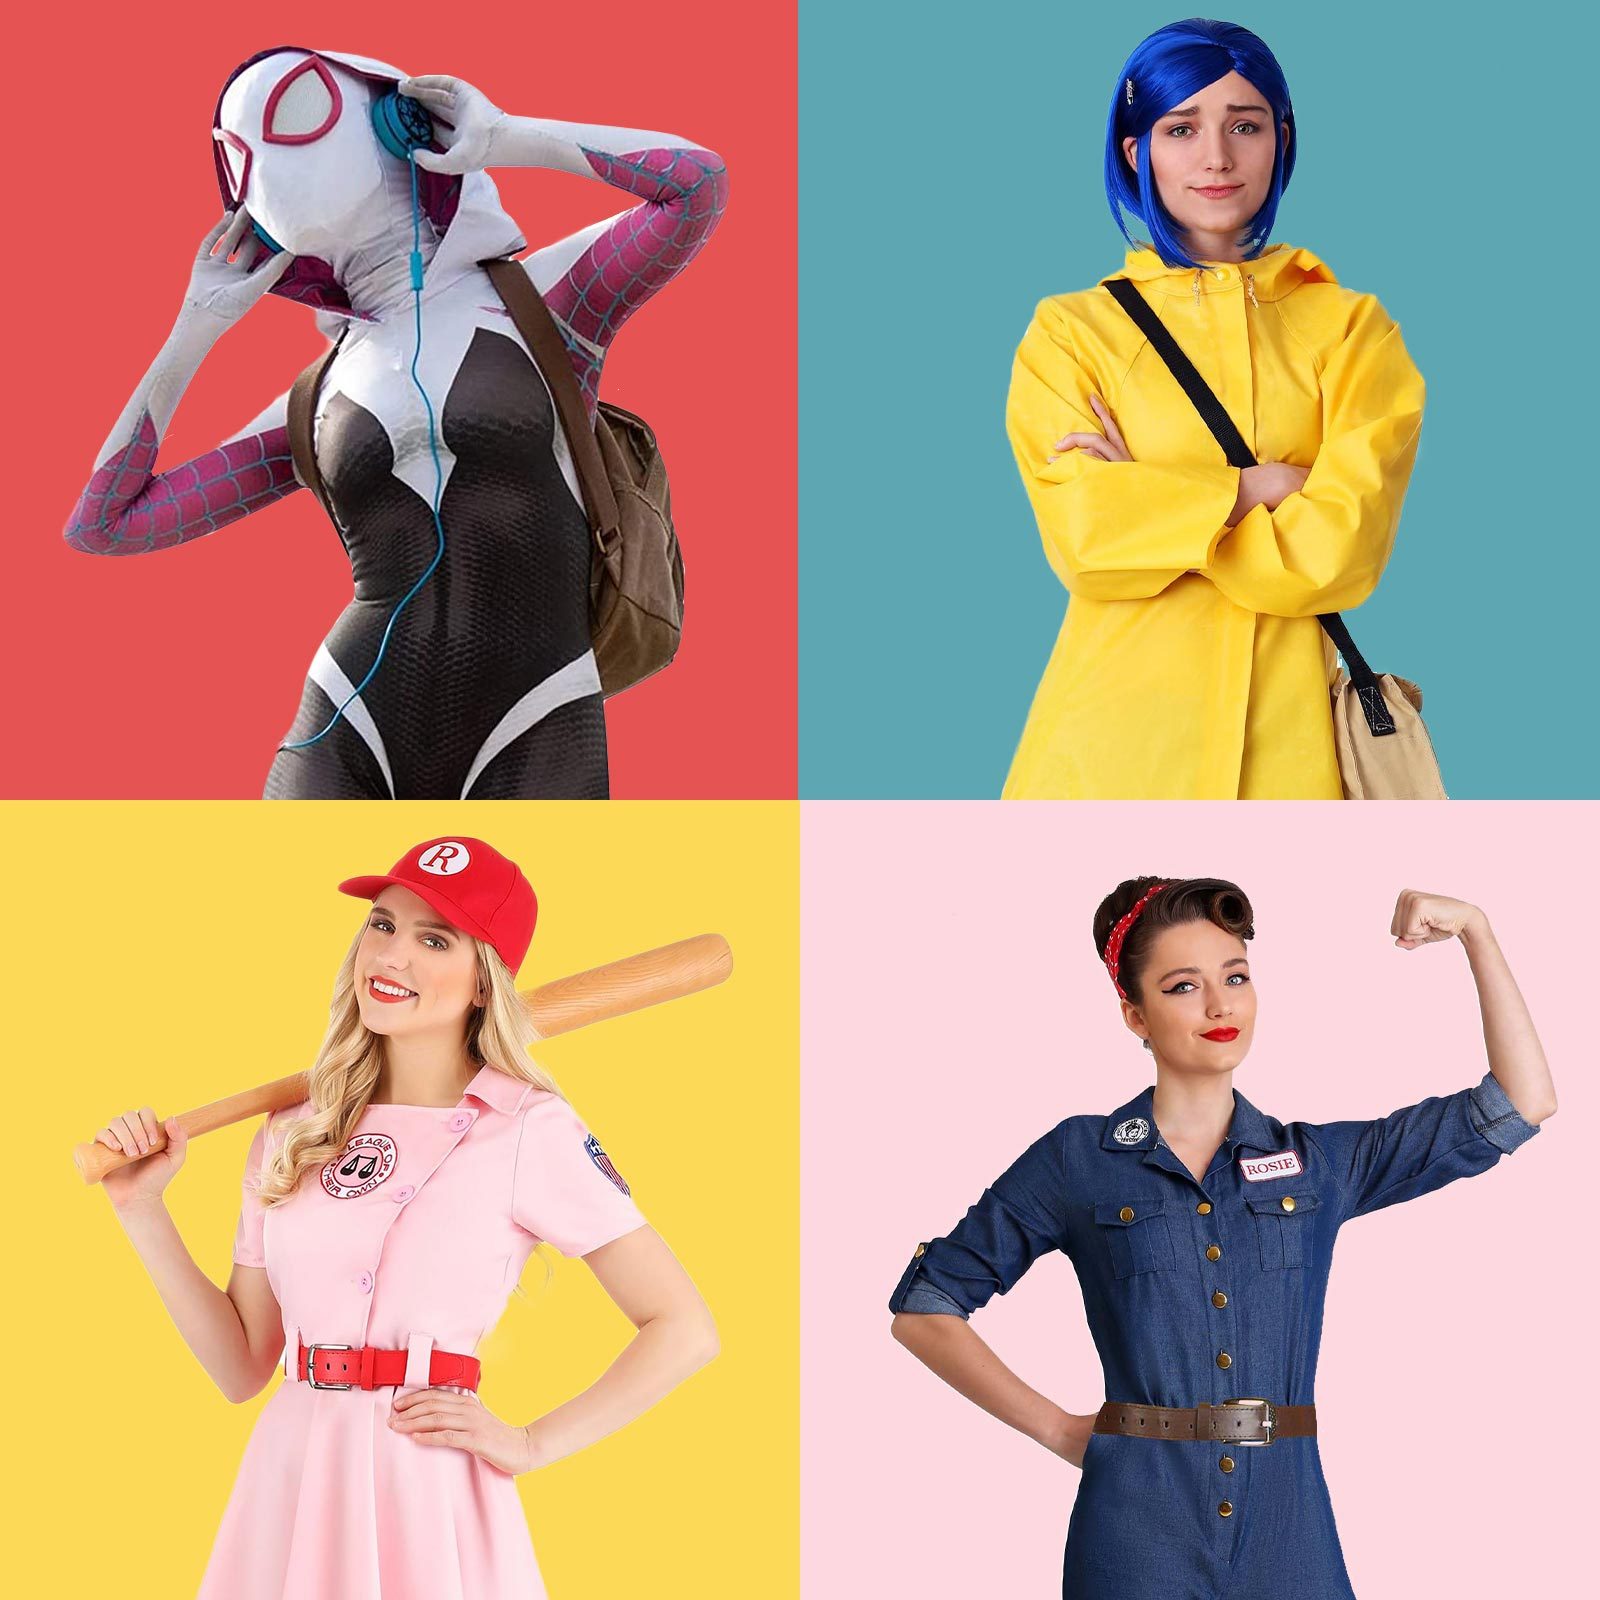 Best 'Mean Girls' Costume Ideas - DIY 'Mean Girls' Halloween Costumes